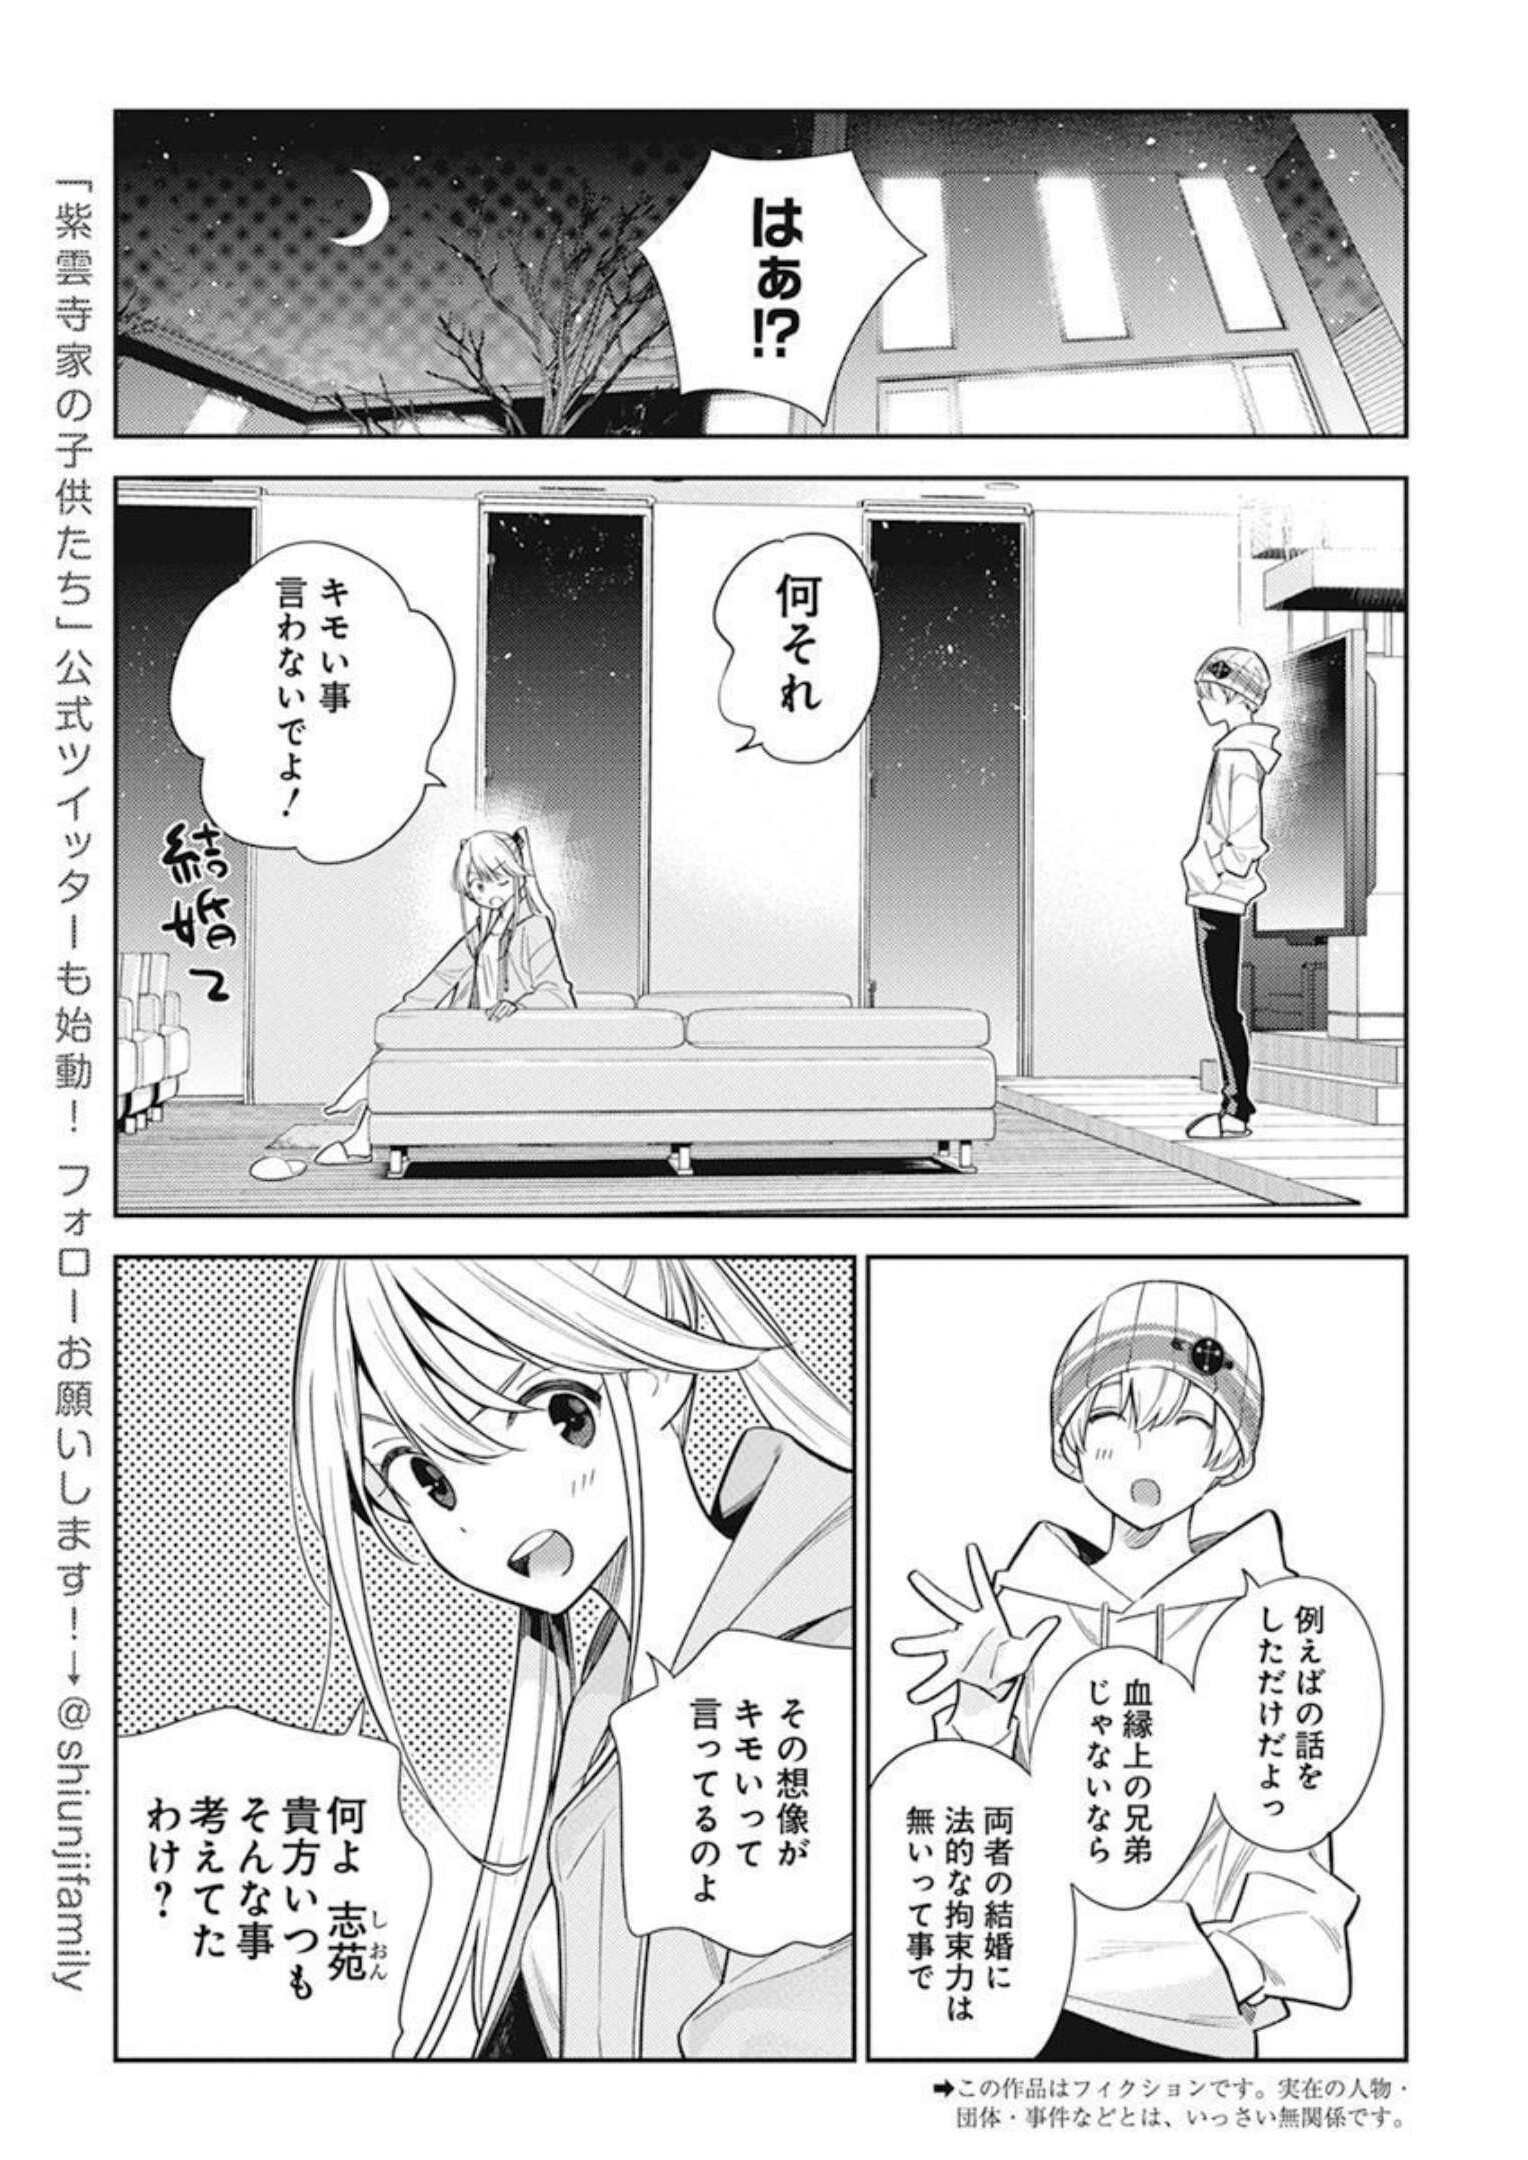 Shiunji-ke no Kodomotachi (Children of the Shiunji Family) - Chapter 03 - Page 4